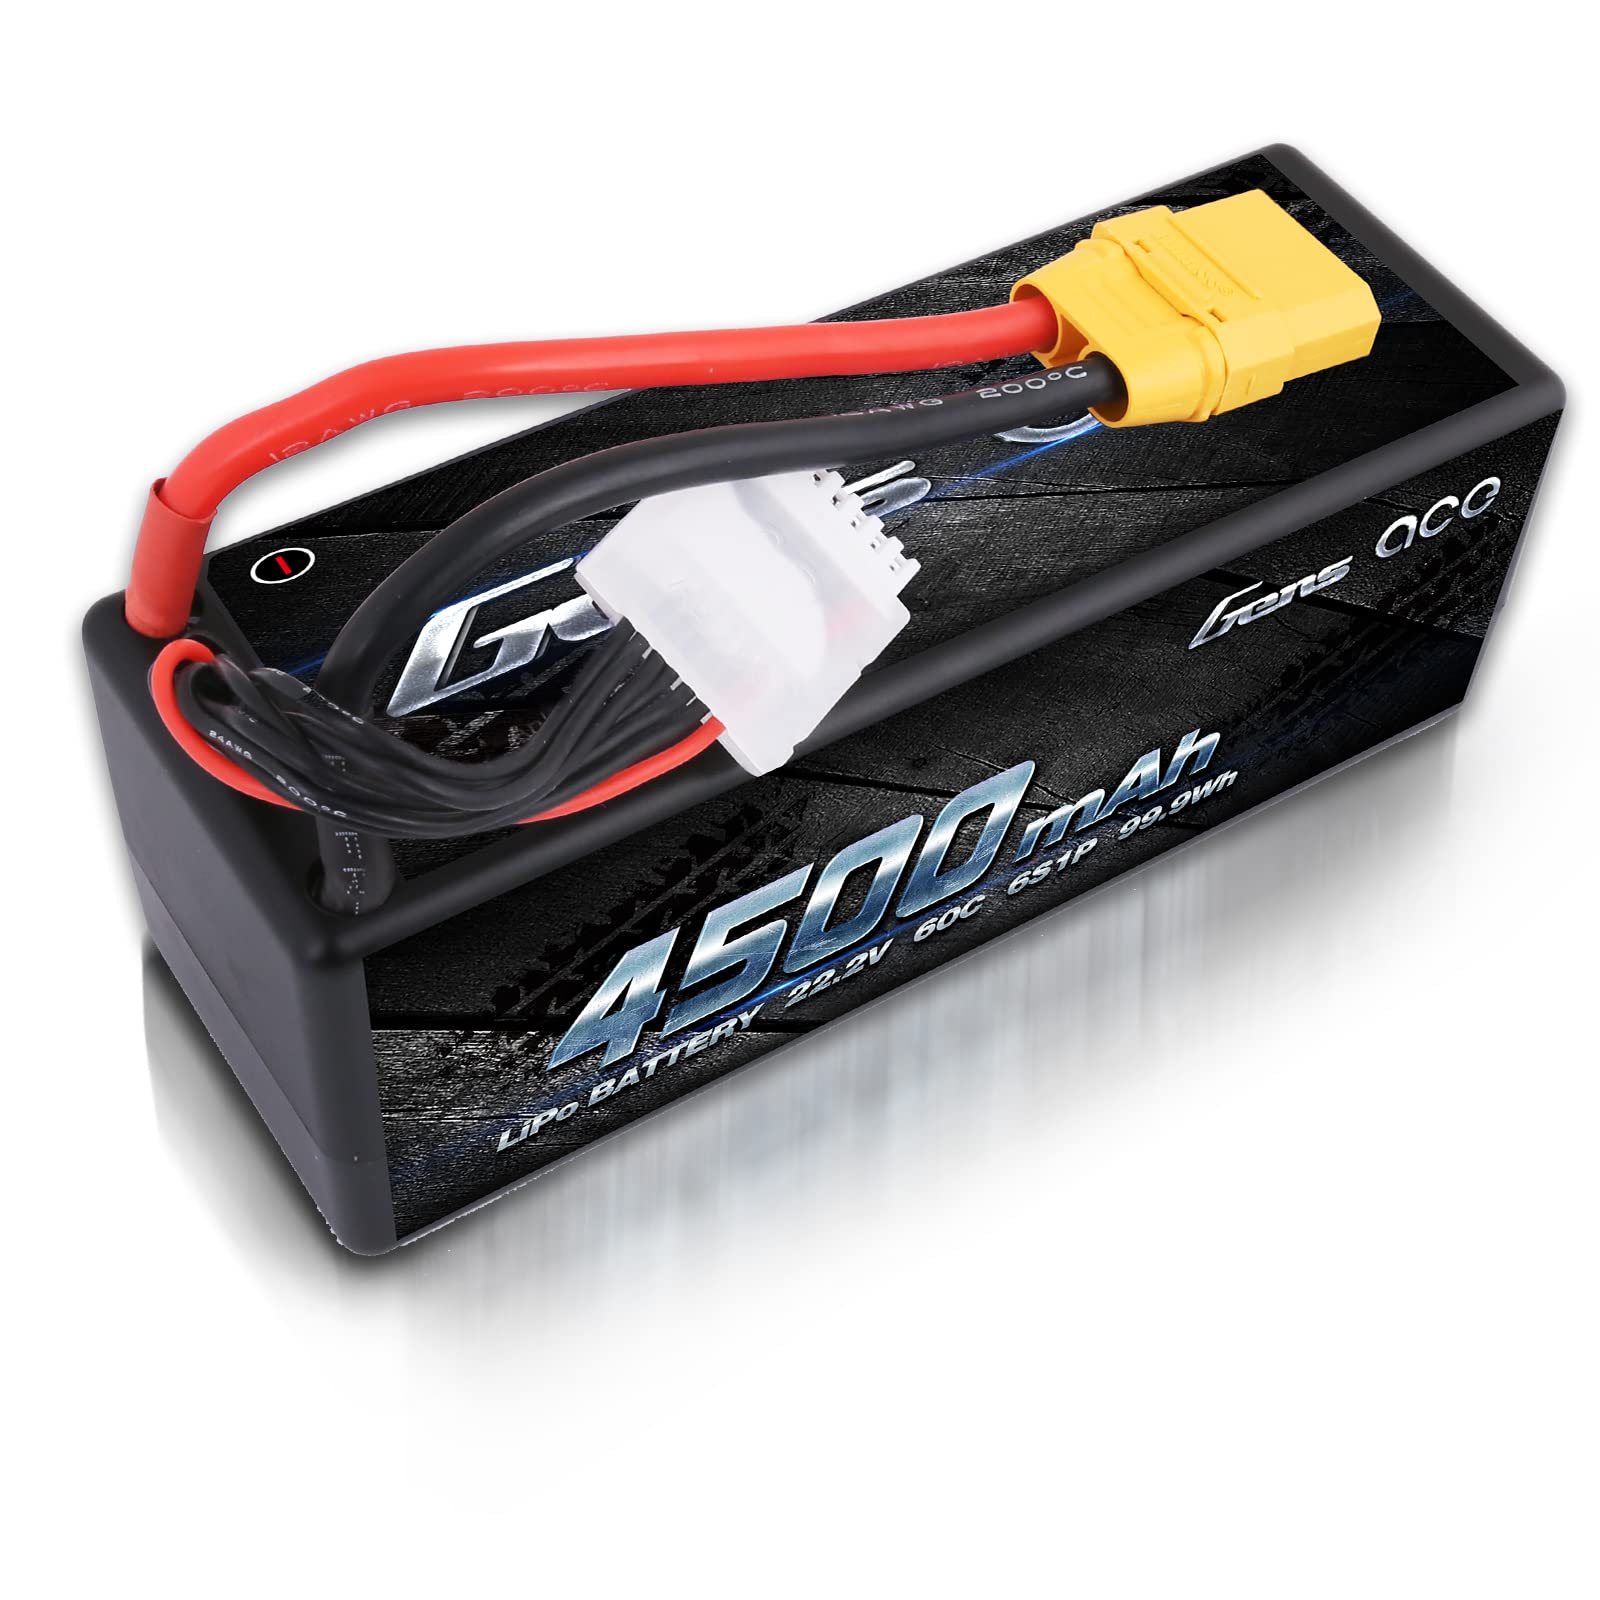 Gens ace 6S lipo 4500mAh 22.2V 6S1P 60C Lipo Battery mit XT90 Connection,für Most 1/8,1/10 Scale RC Cars